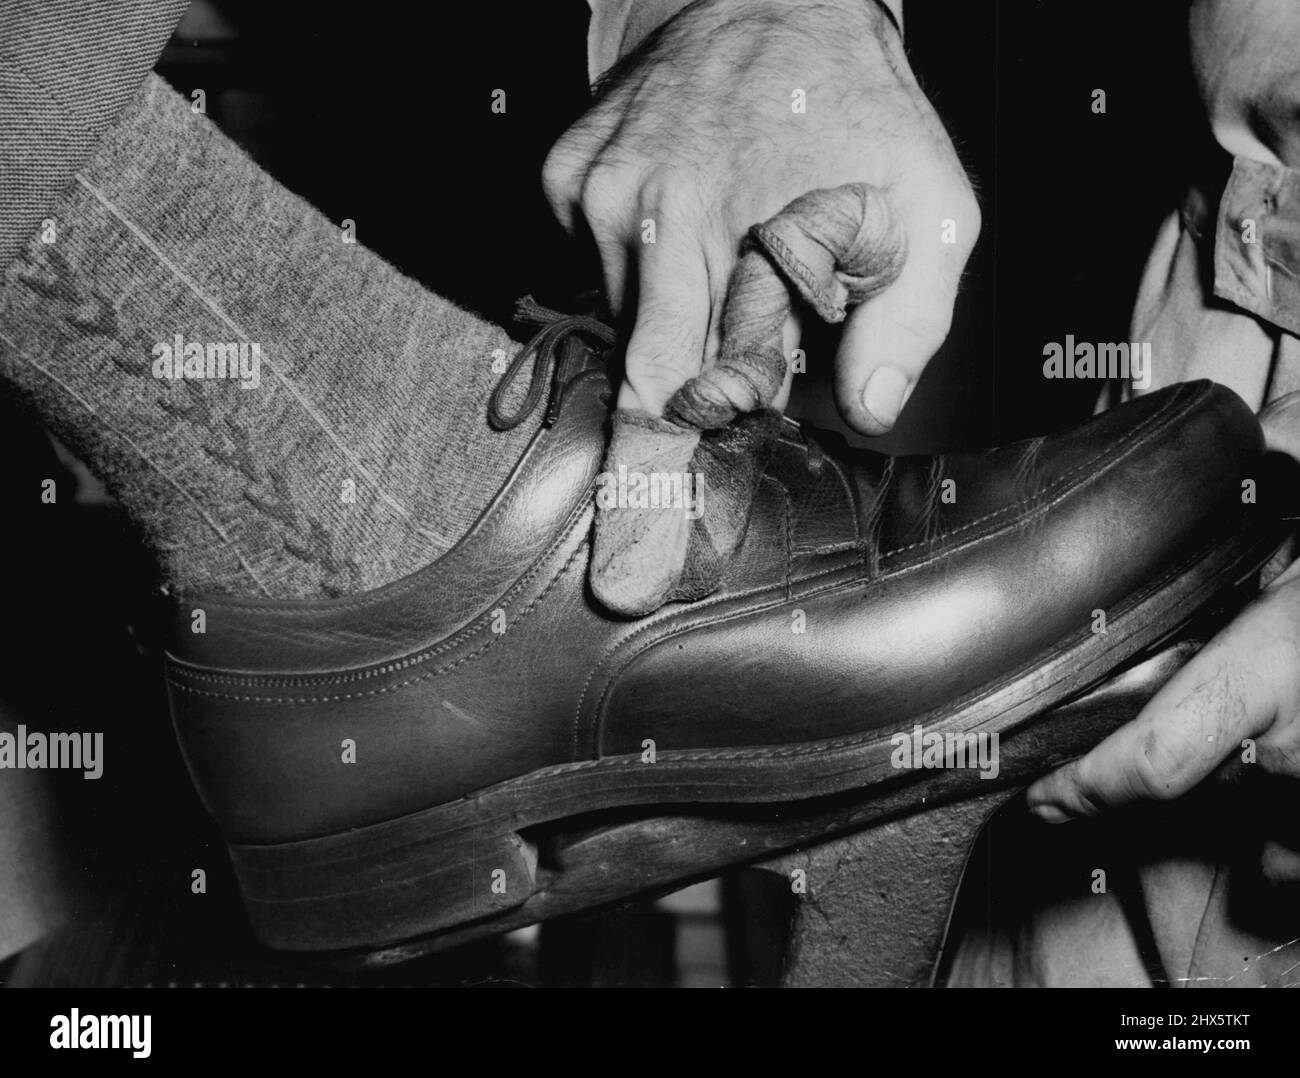 Smooth roads, socks over shoes Date: 31 January 1950 Keywords: SHOES, socks  Stock Photo - Alamy